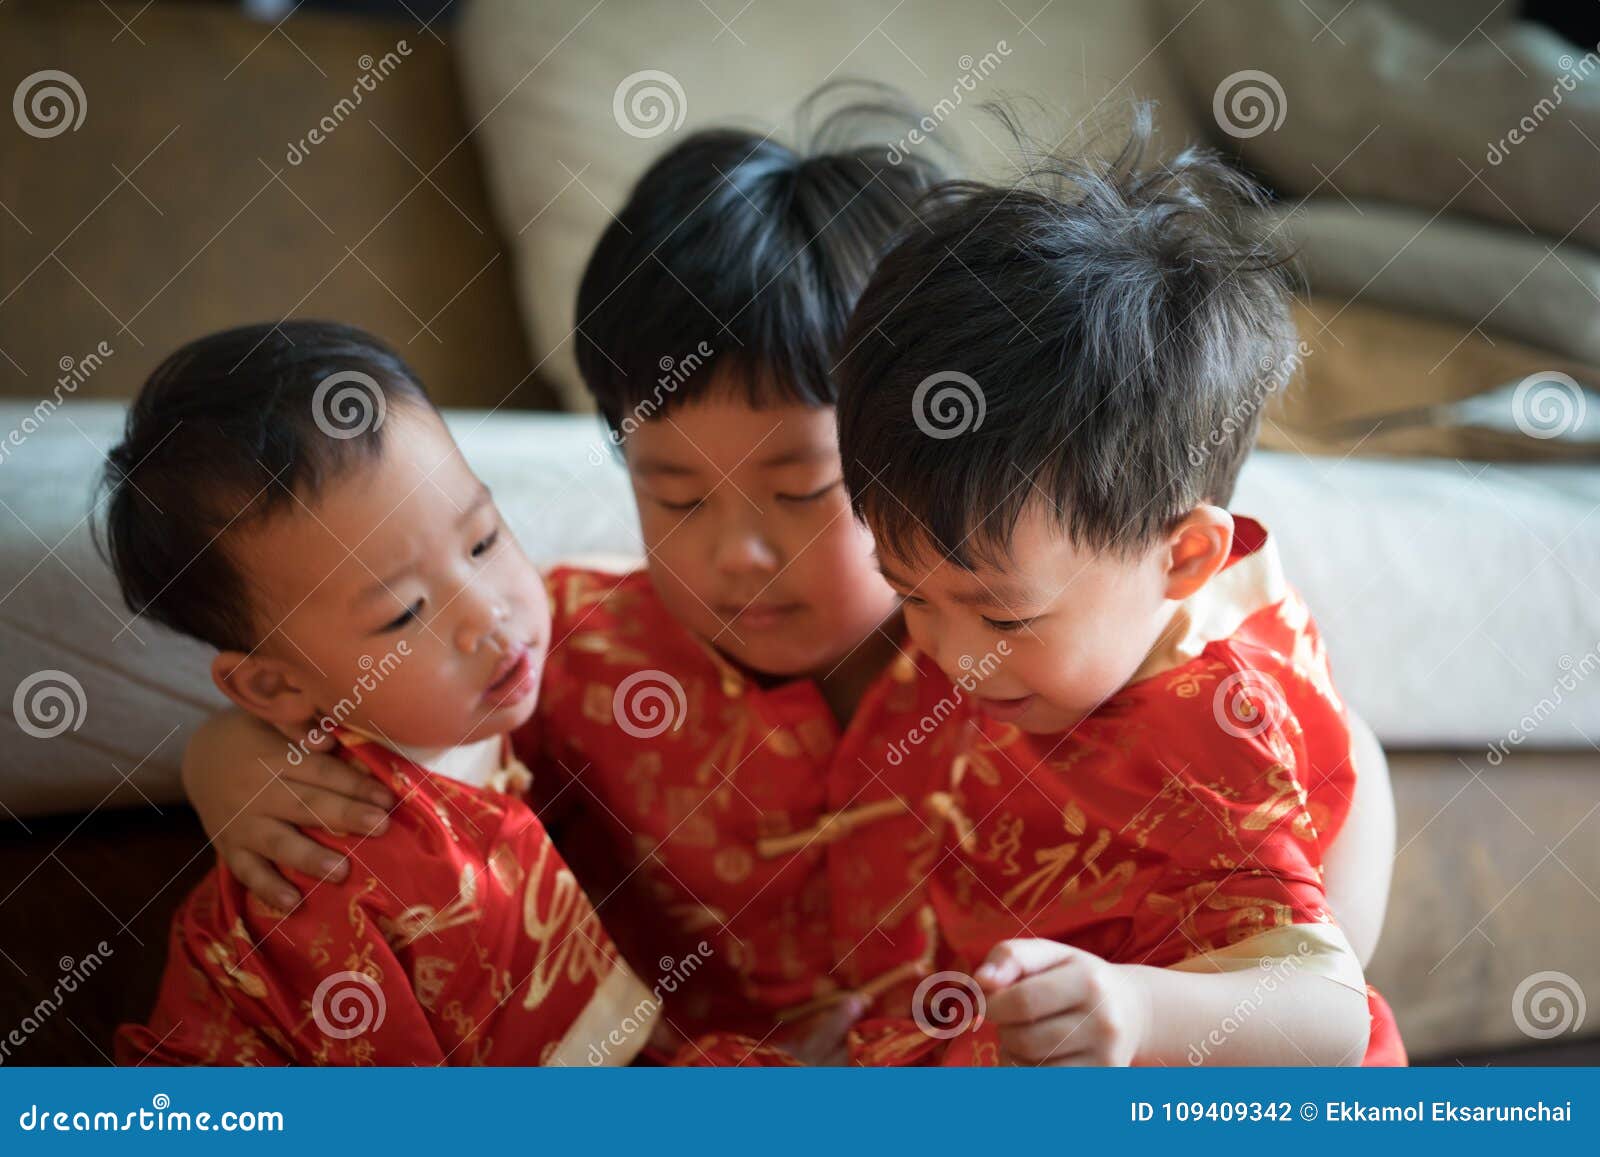 Chinese boys cute 